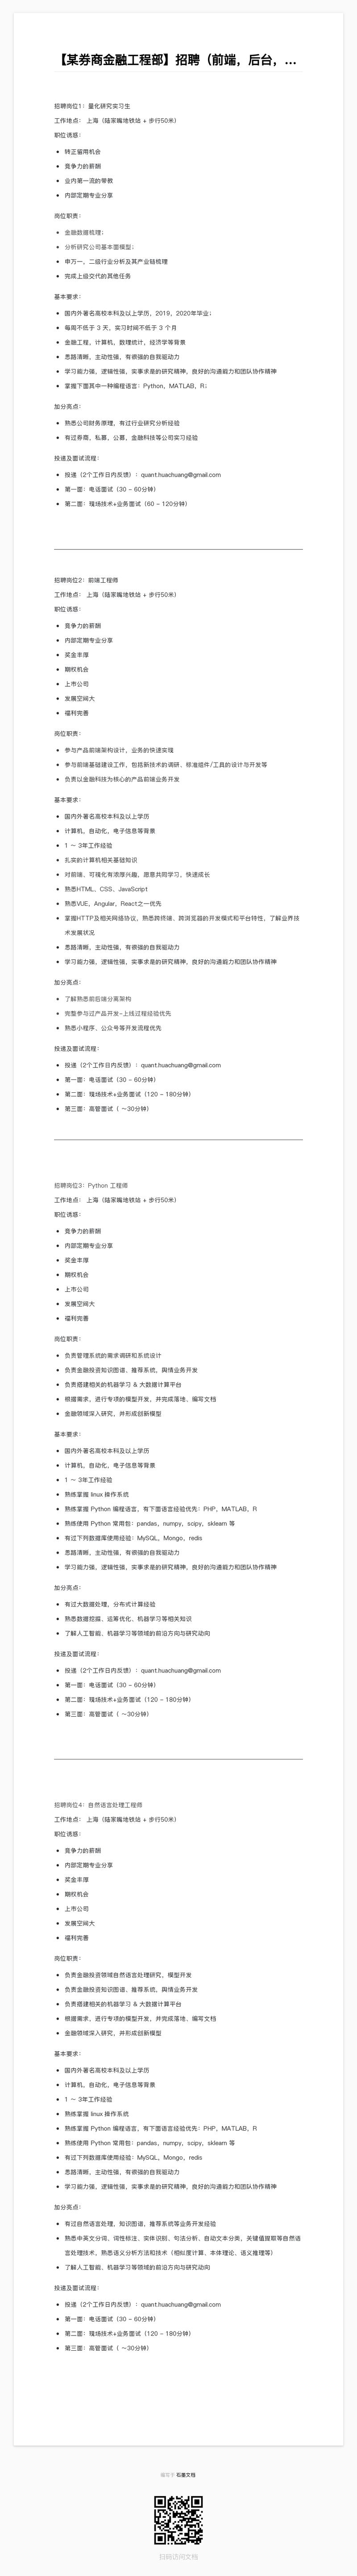 taotao.li于2018-06-12 12:52发布的图片